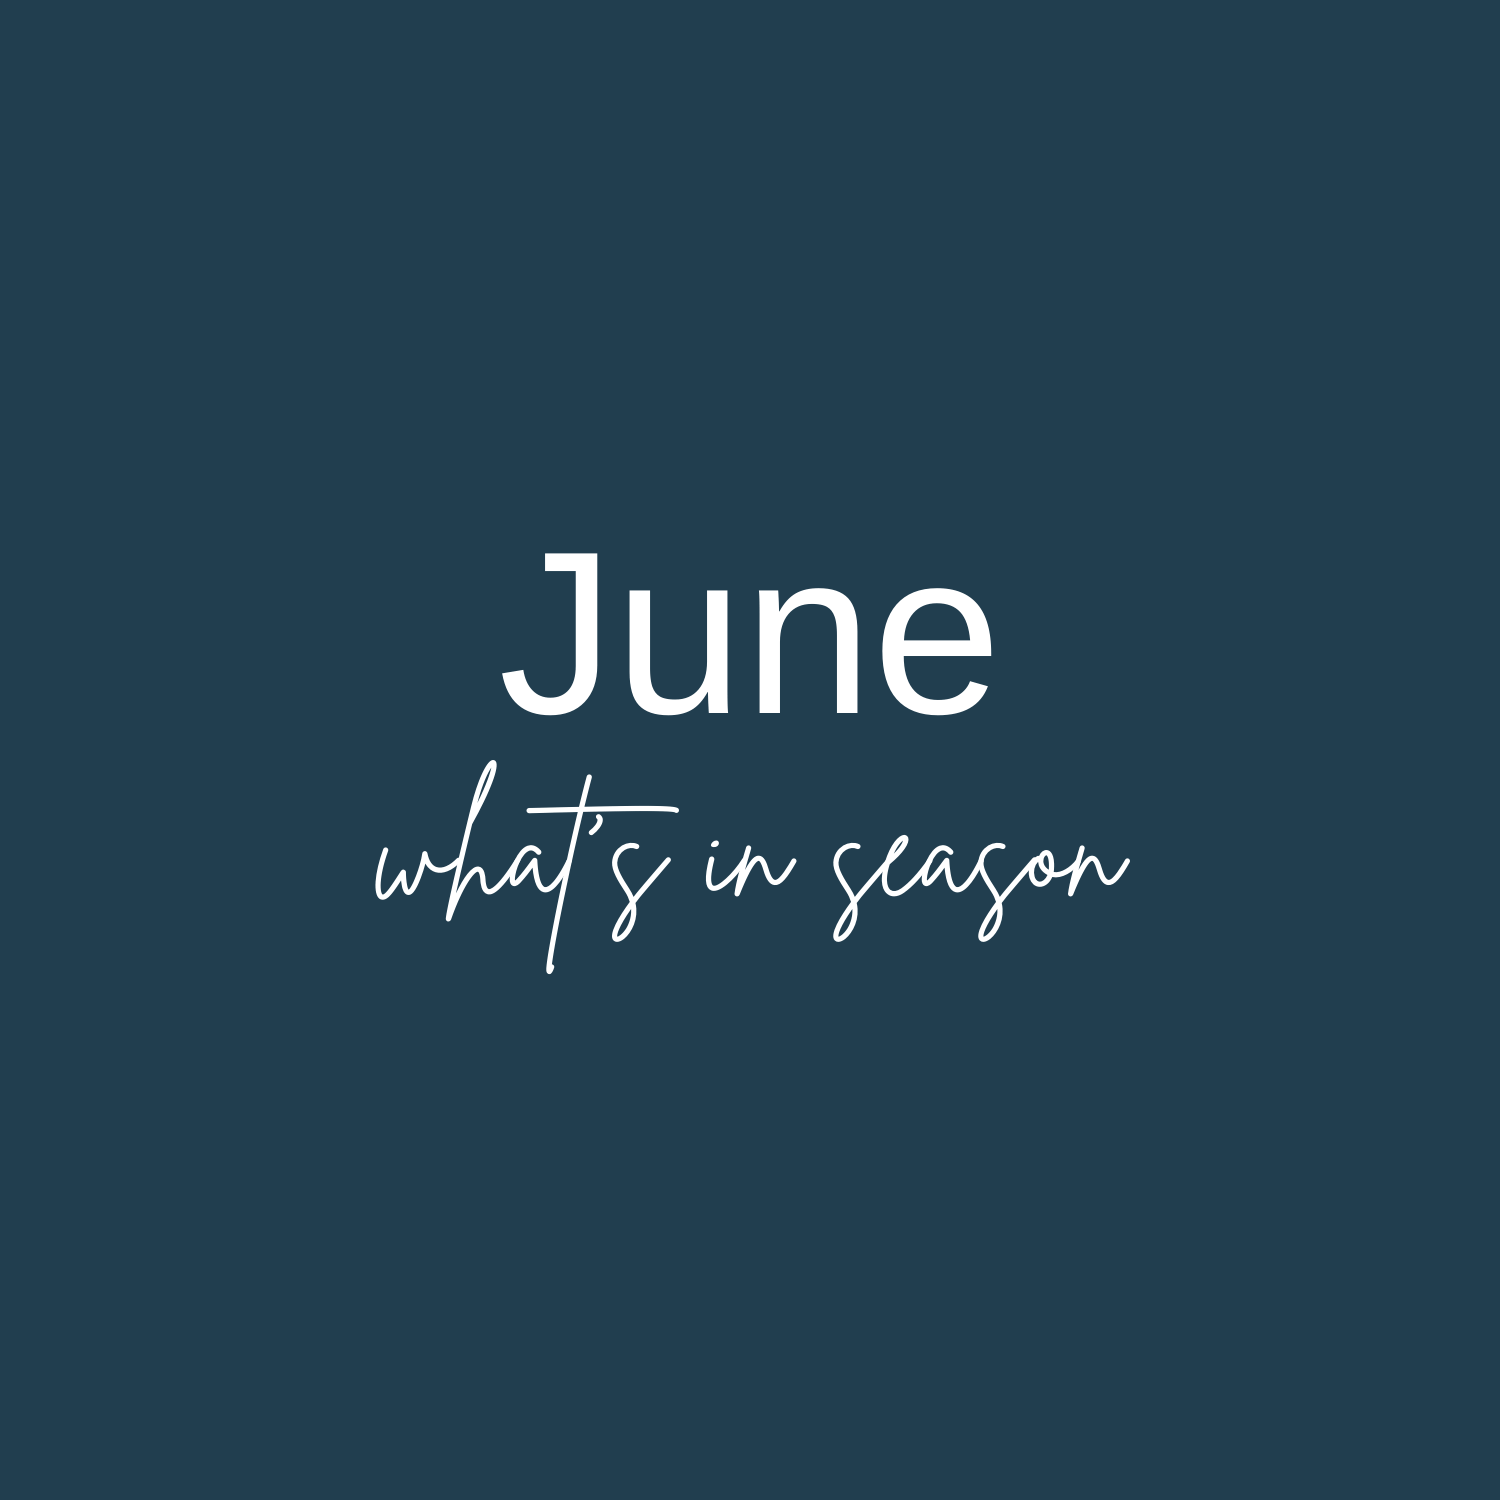 -What’s in Season in June?